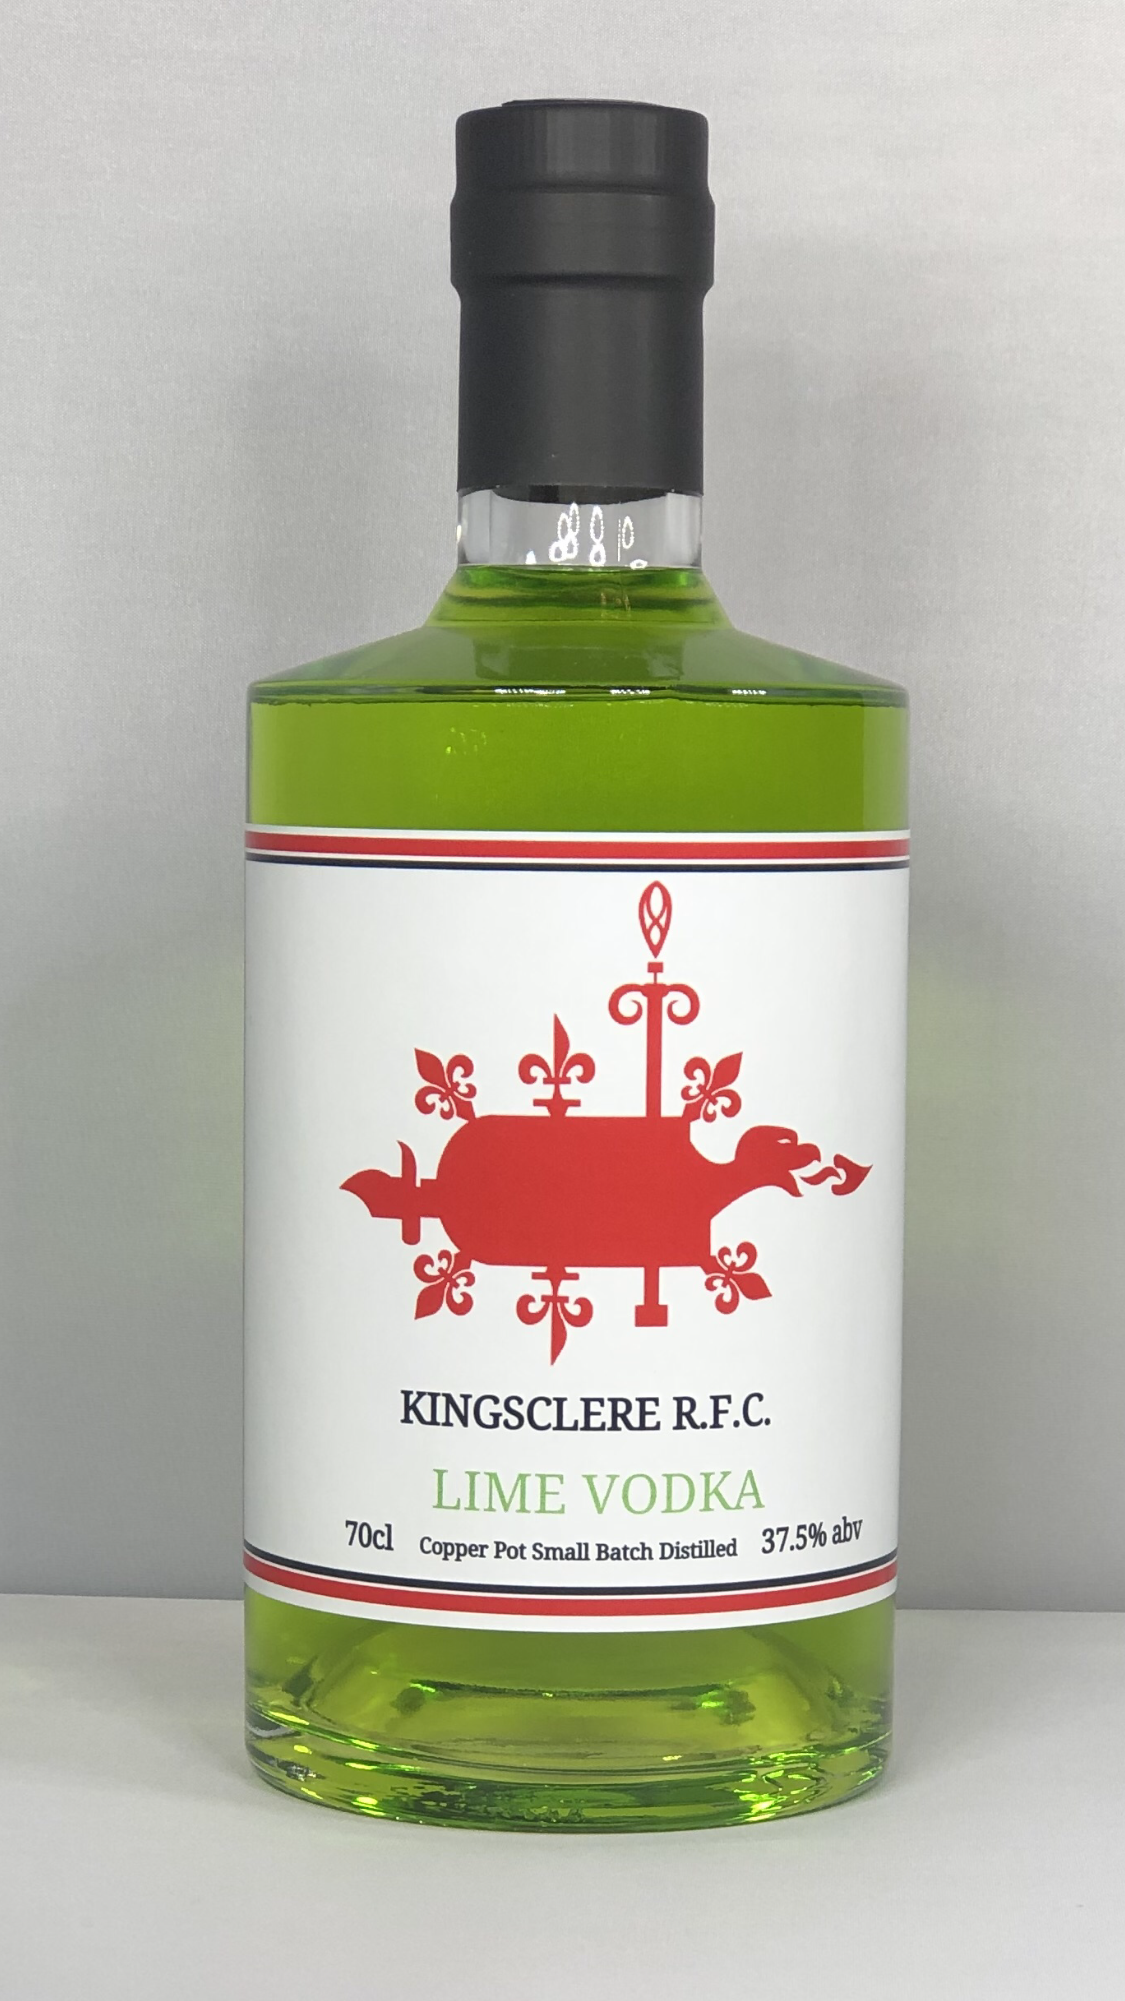 Kingsclere R.F.C. Lime Vodka